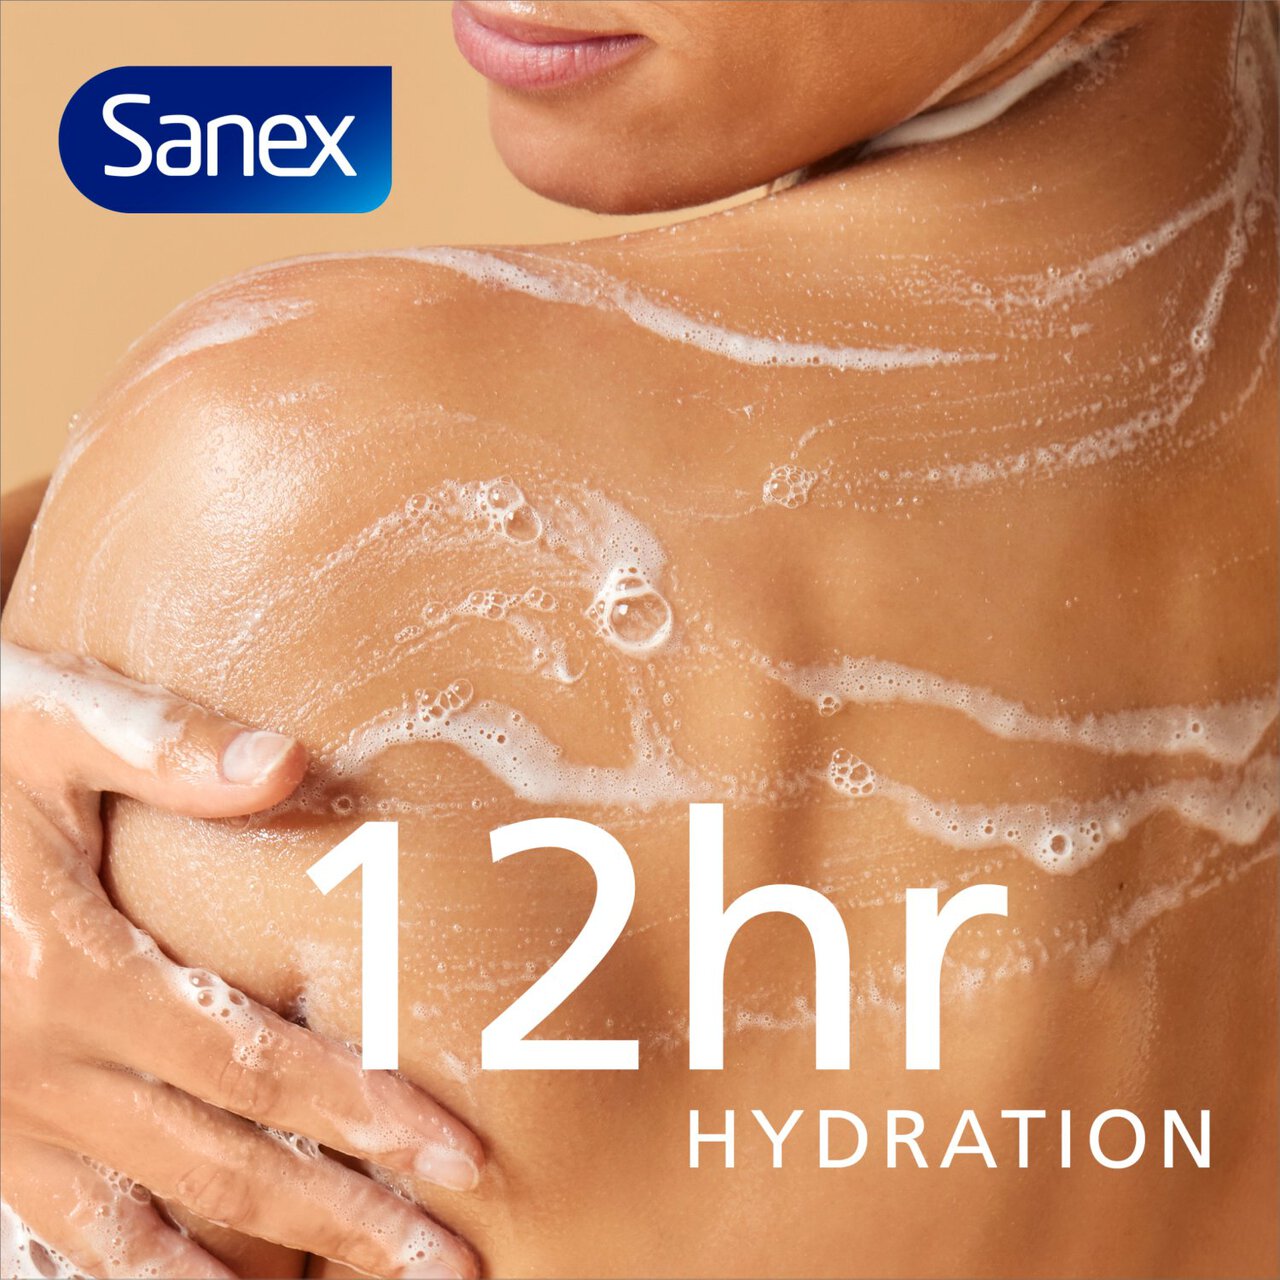 Sanex Biome Protect Hypoallergenic Shower Gel 450ml